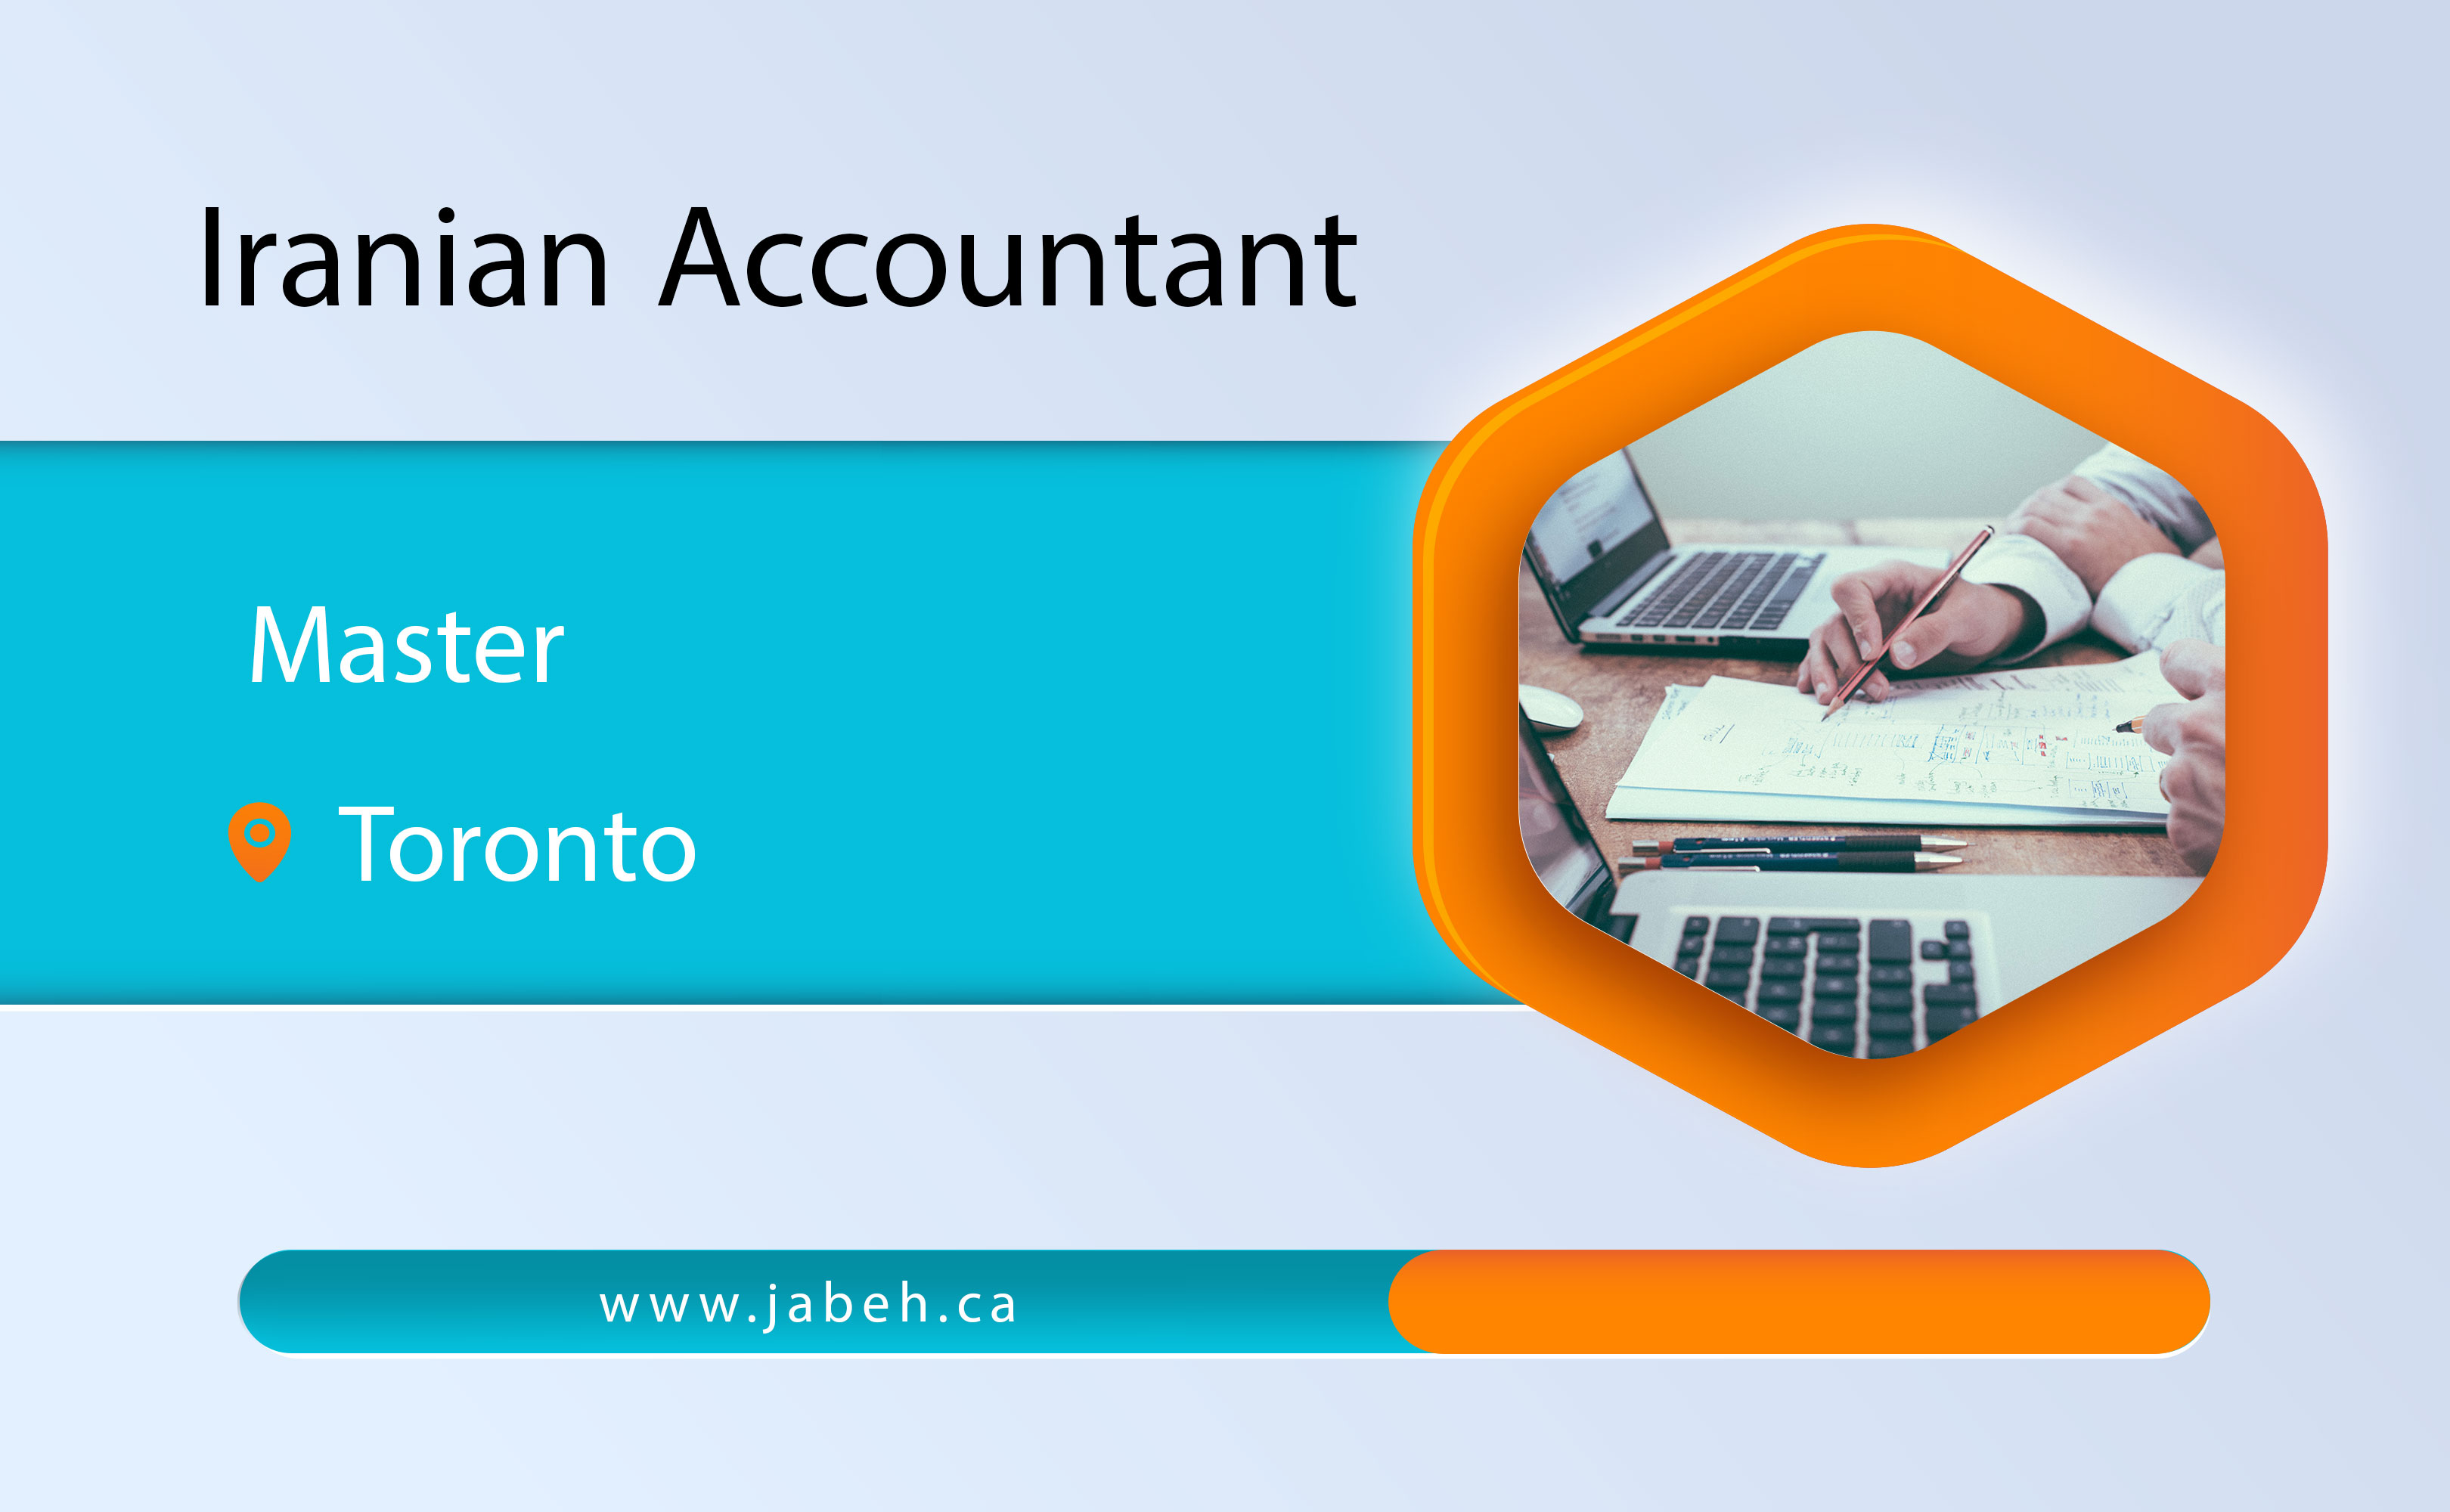 Iranian accounting master in Toronto